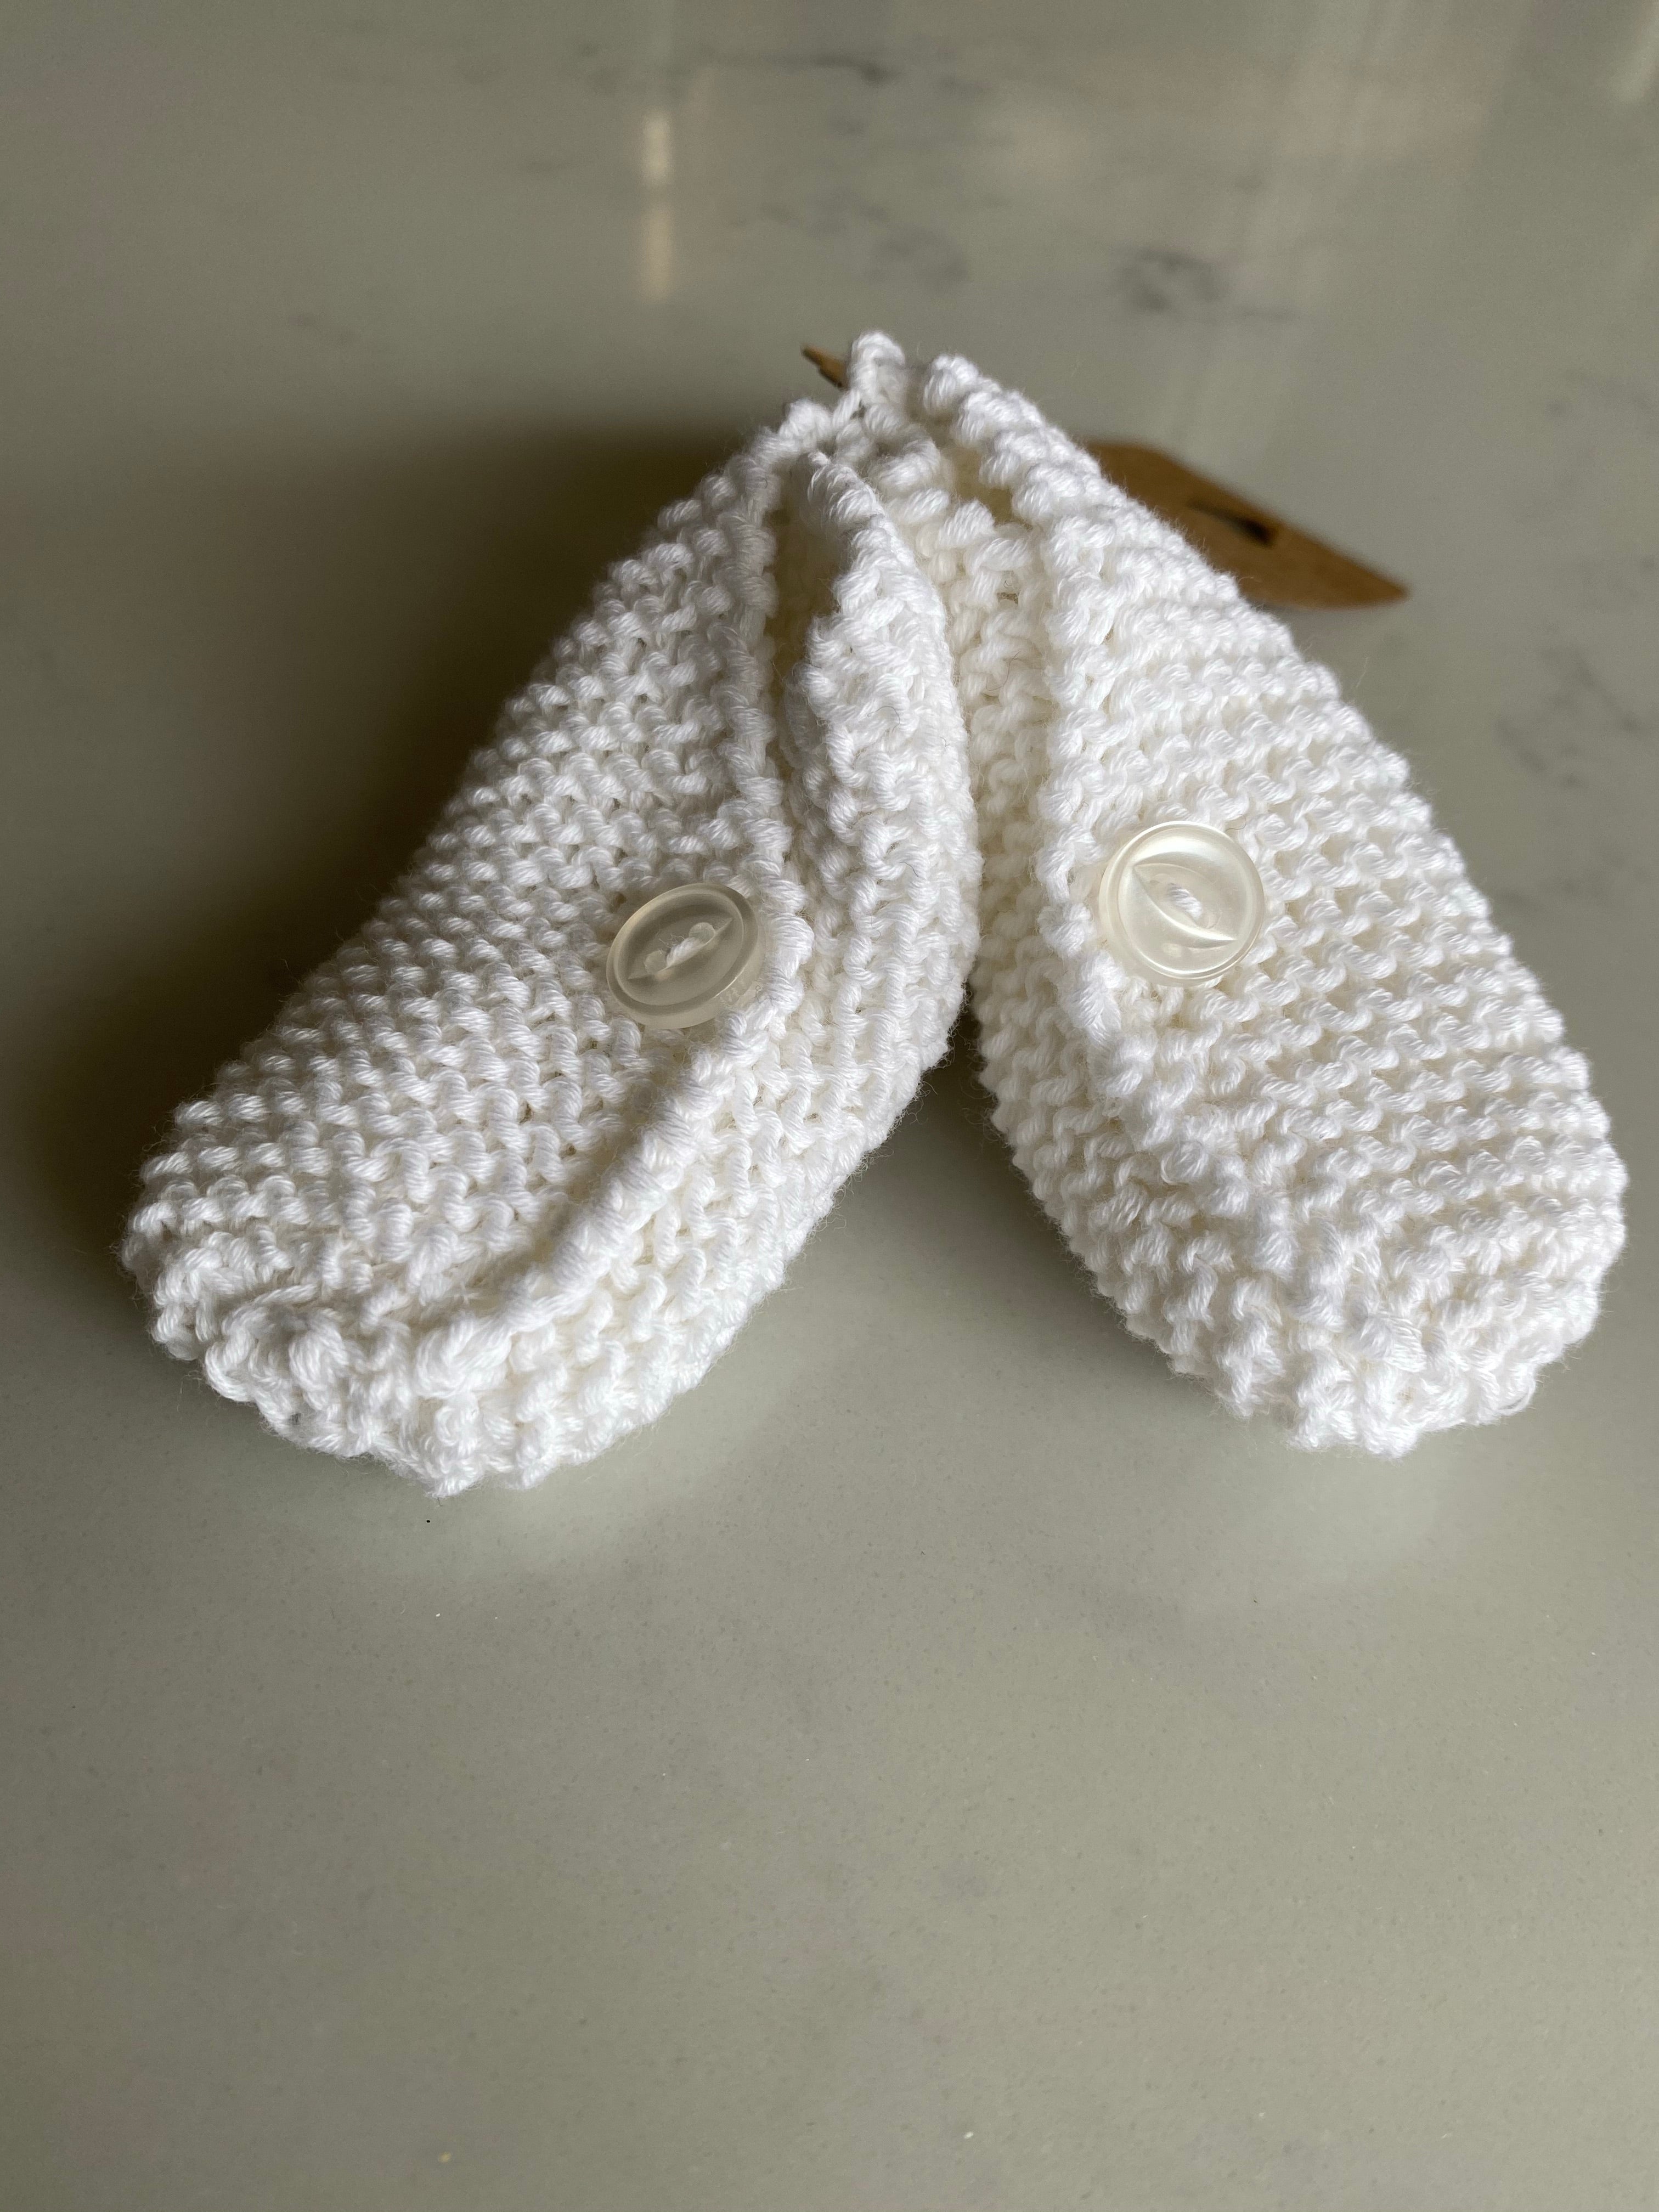 Handmade knitted booties